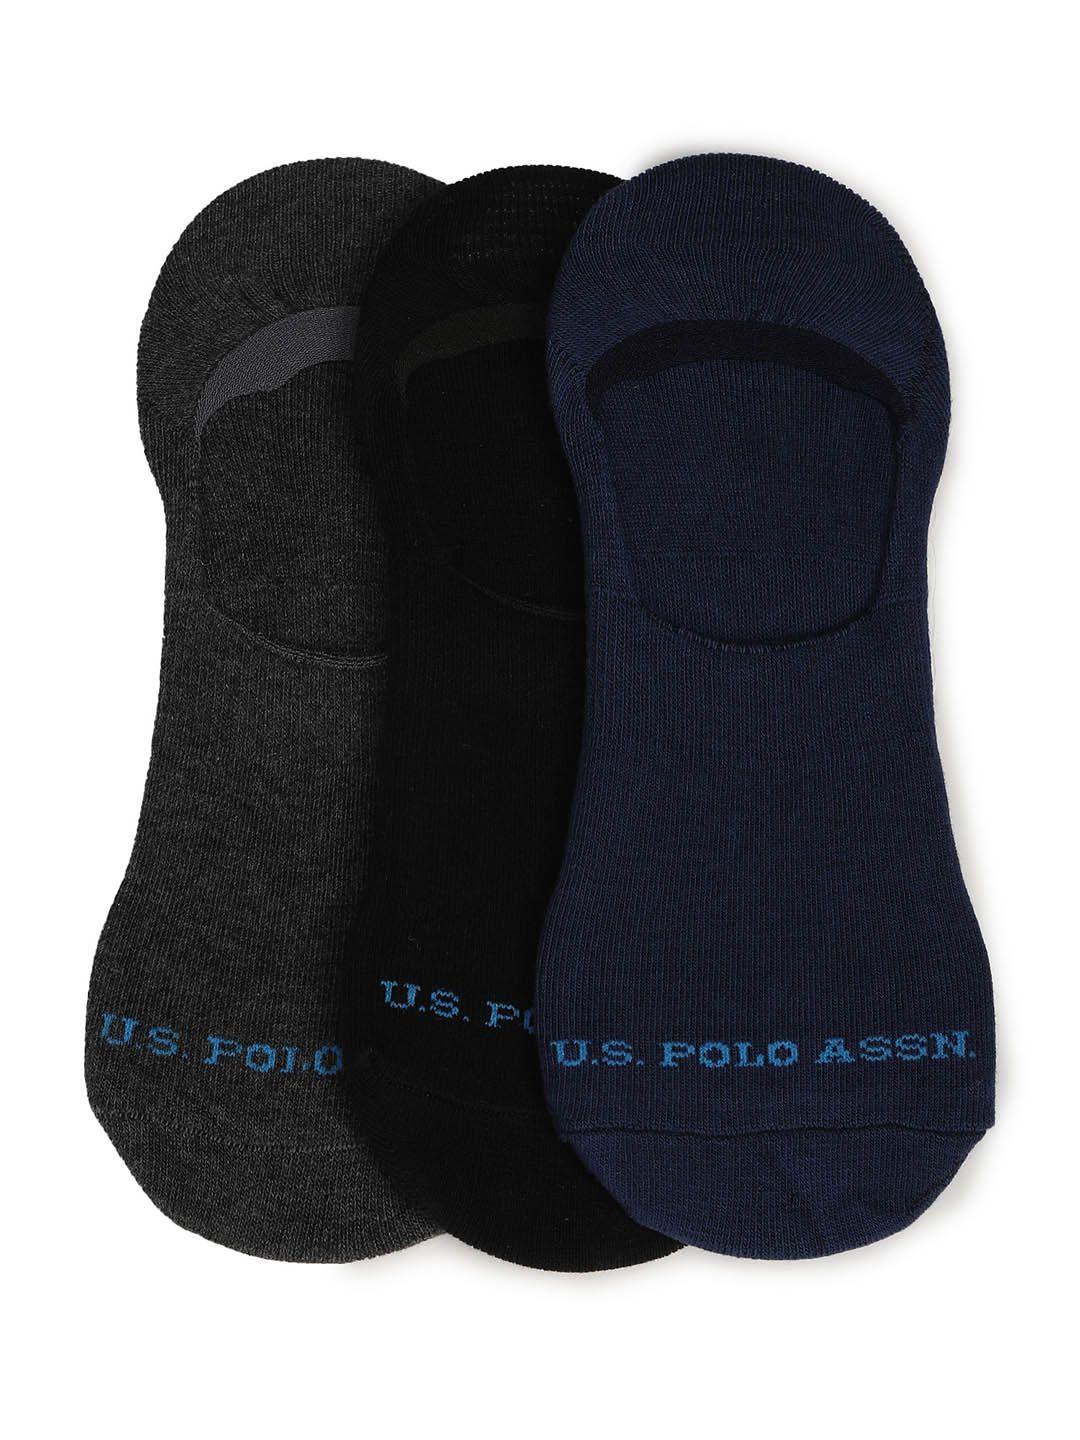 u.s. polo assn. men pack of 3 no show socks